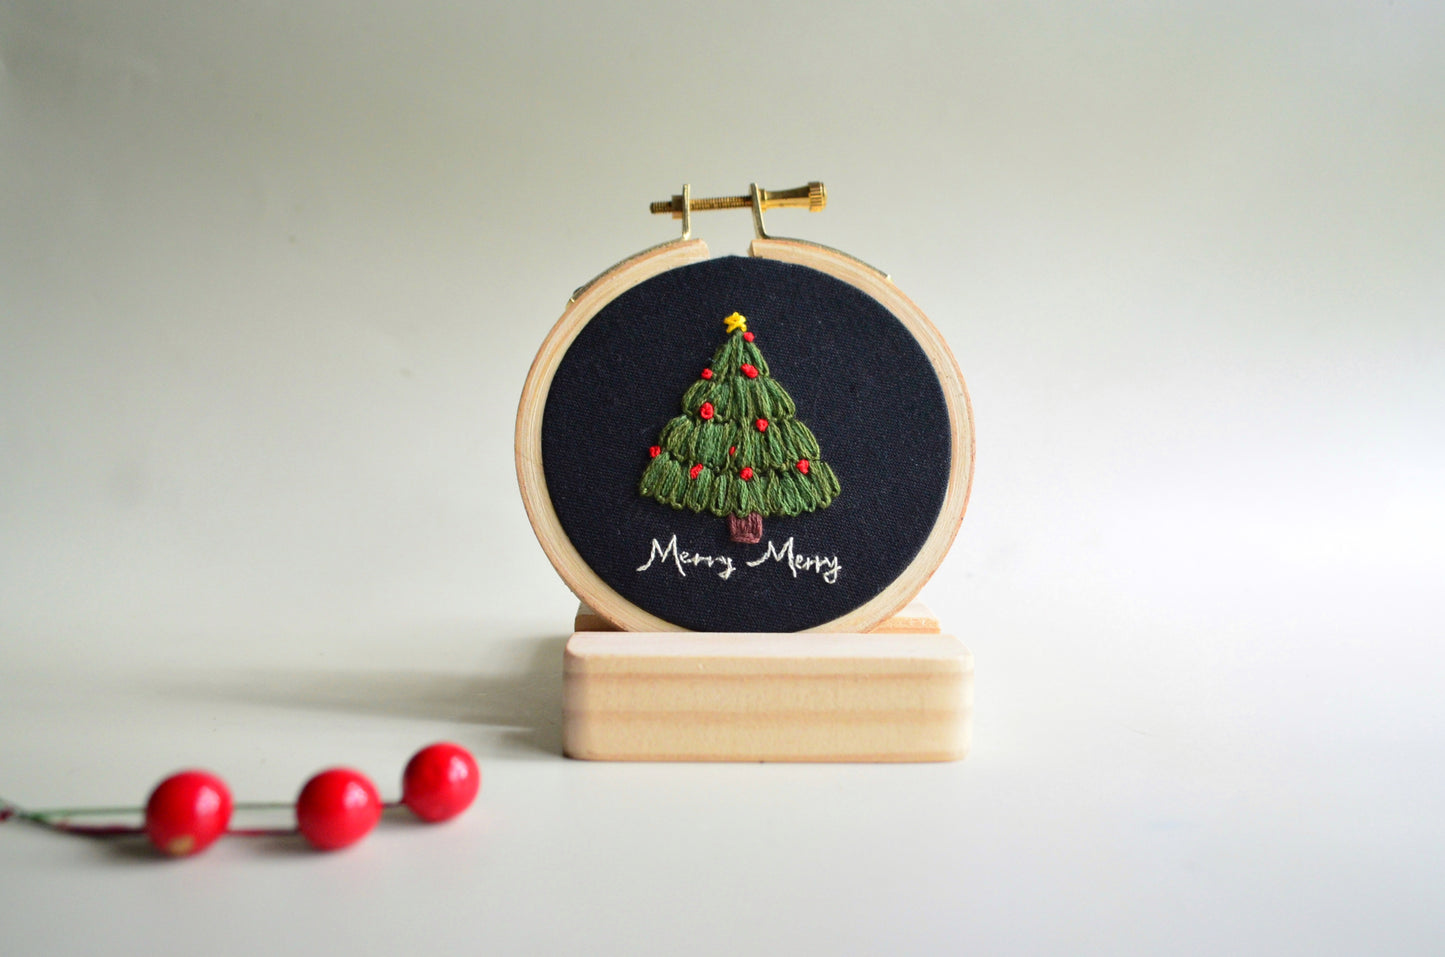 Merry Merry- 3” Christmas Tree Ornament